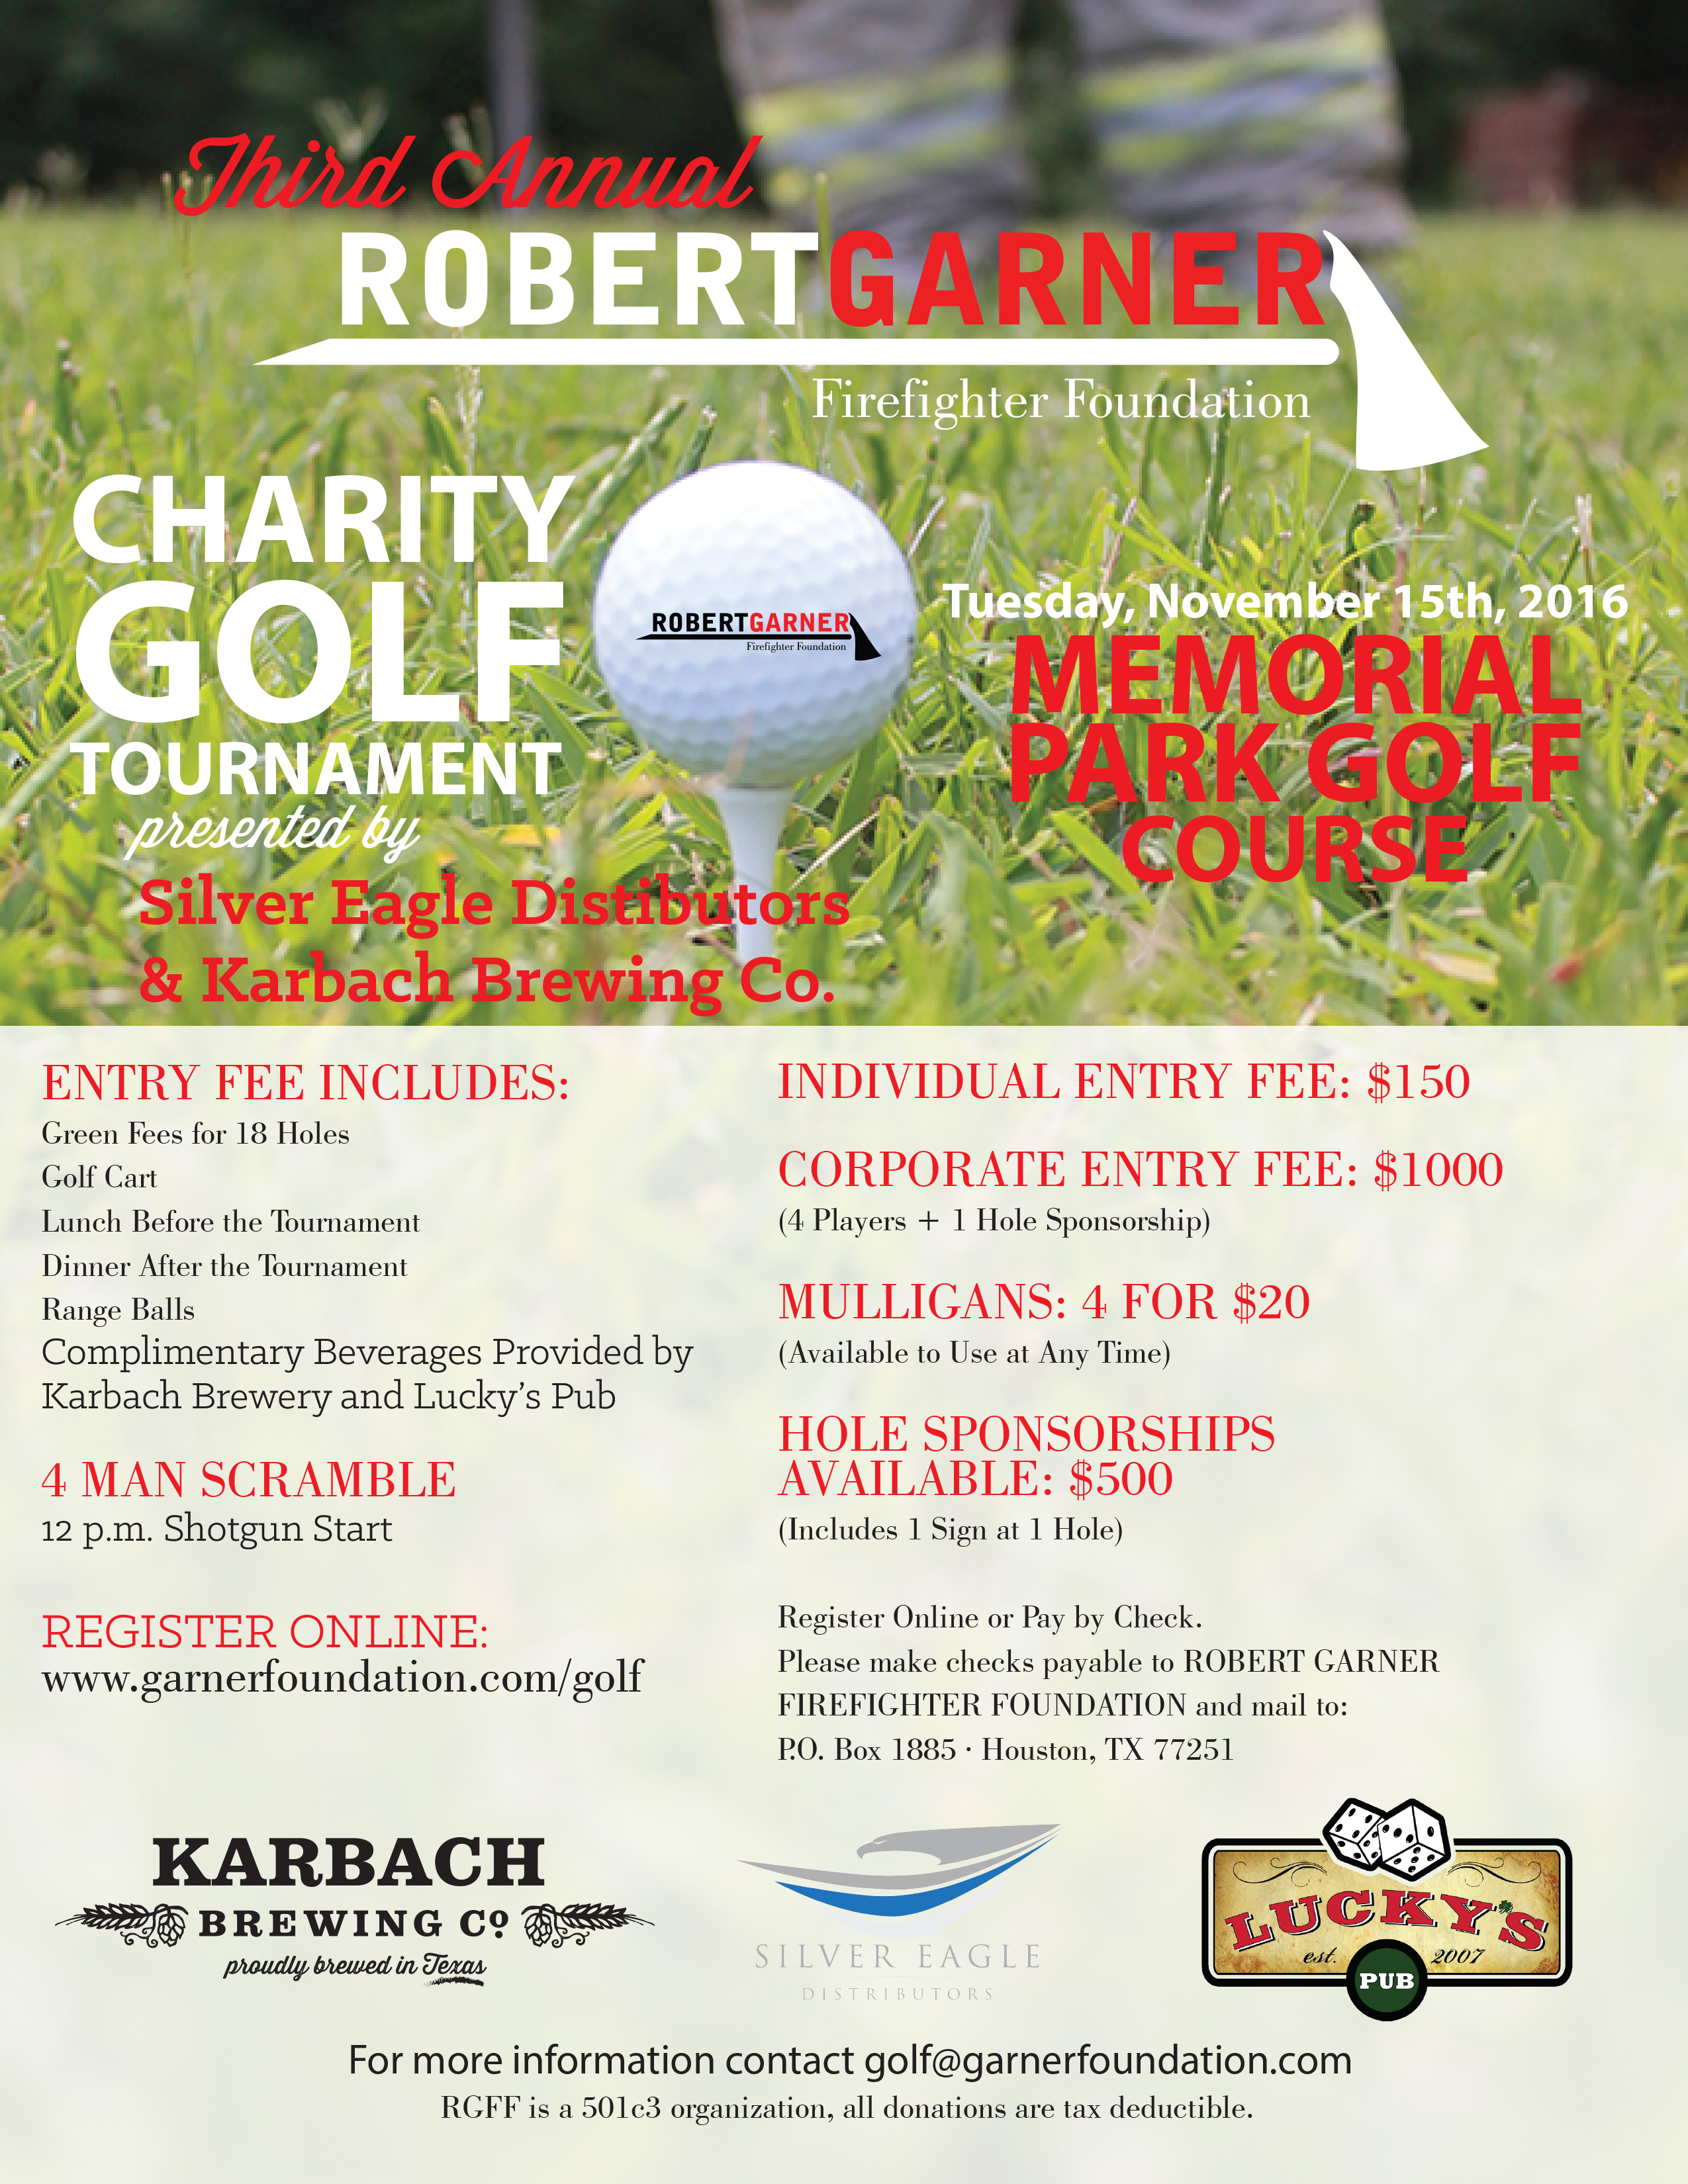 RGFF 3rd Annual Golf Tournament @ Memorial Park Golf Course | Houston | Texas | United States